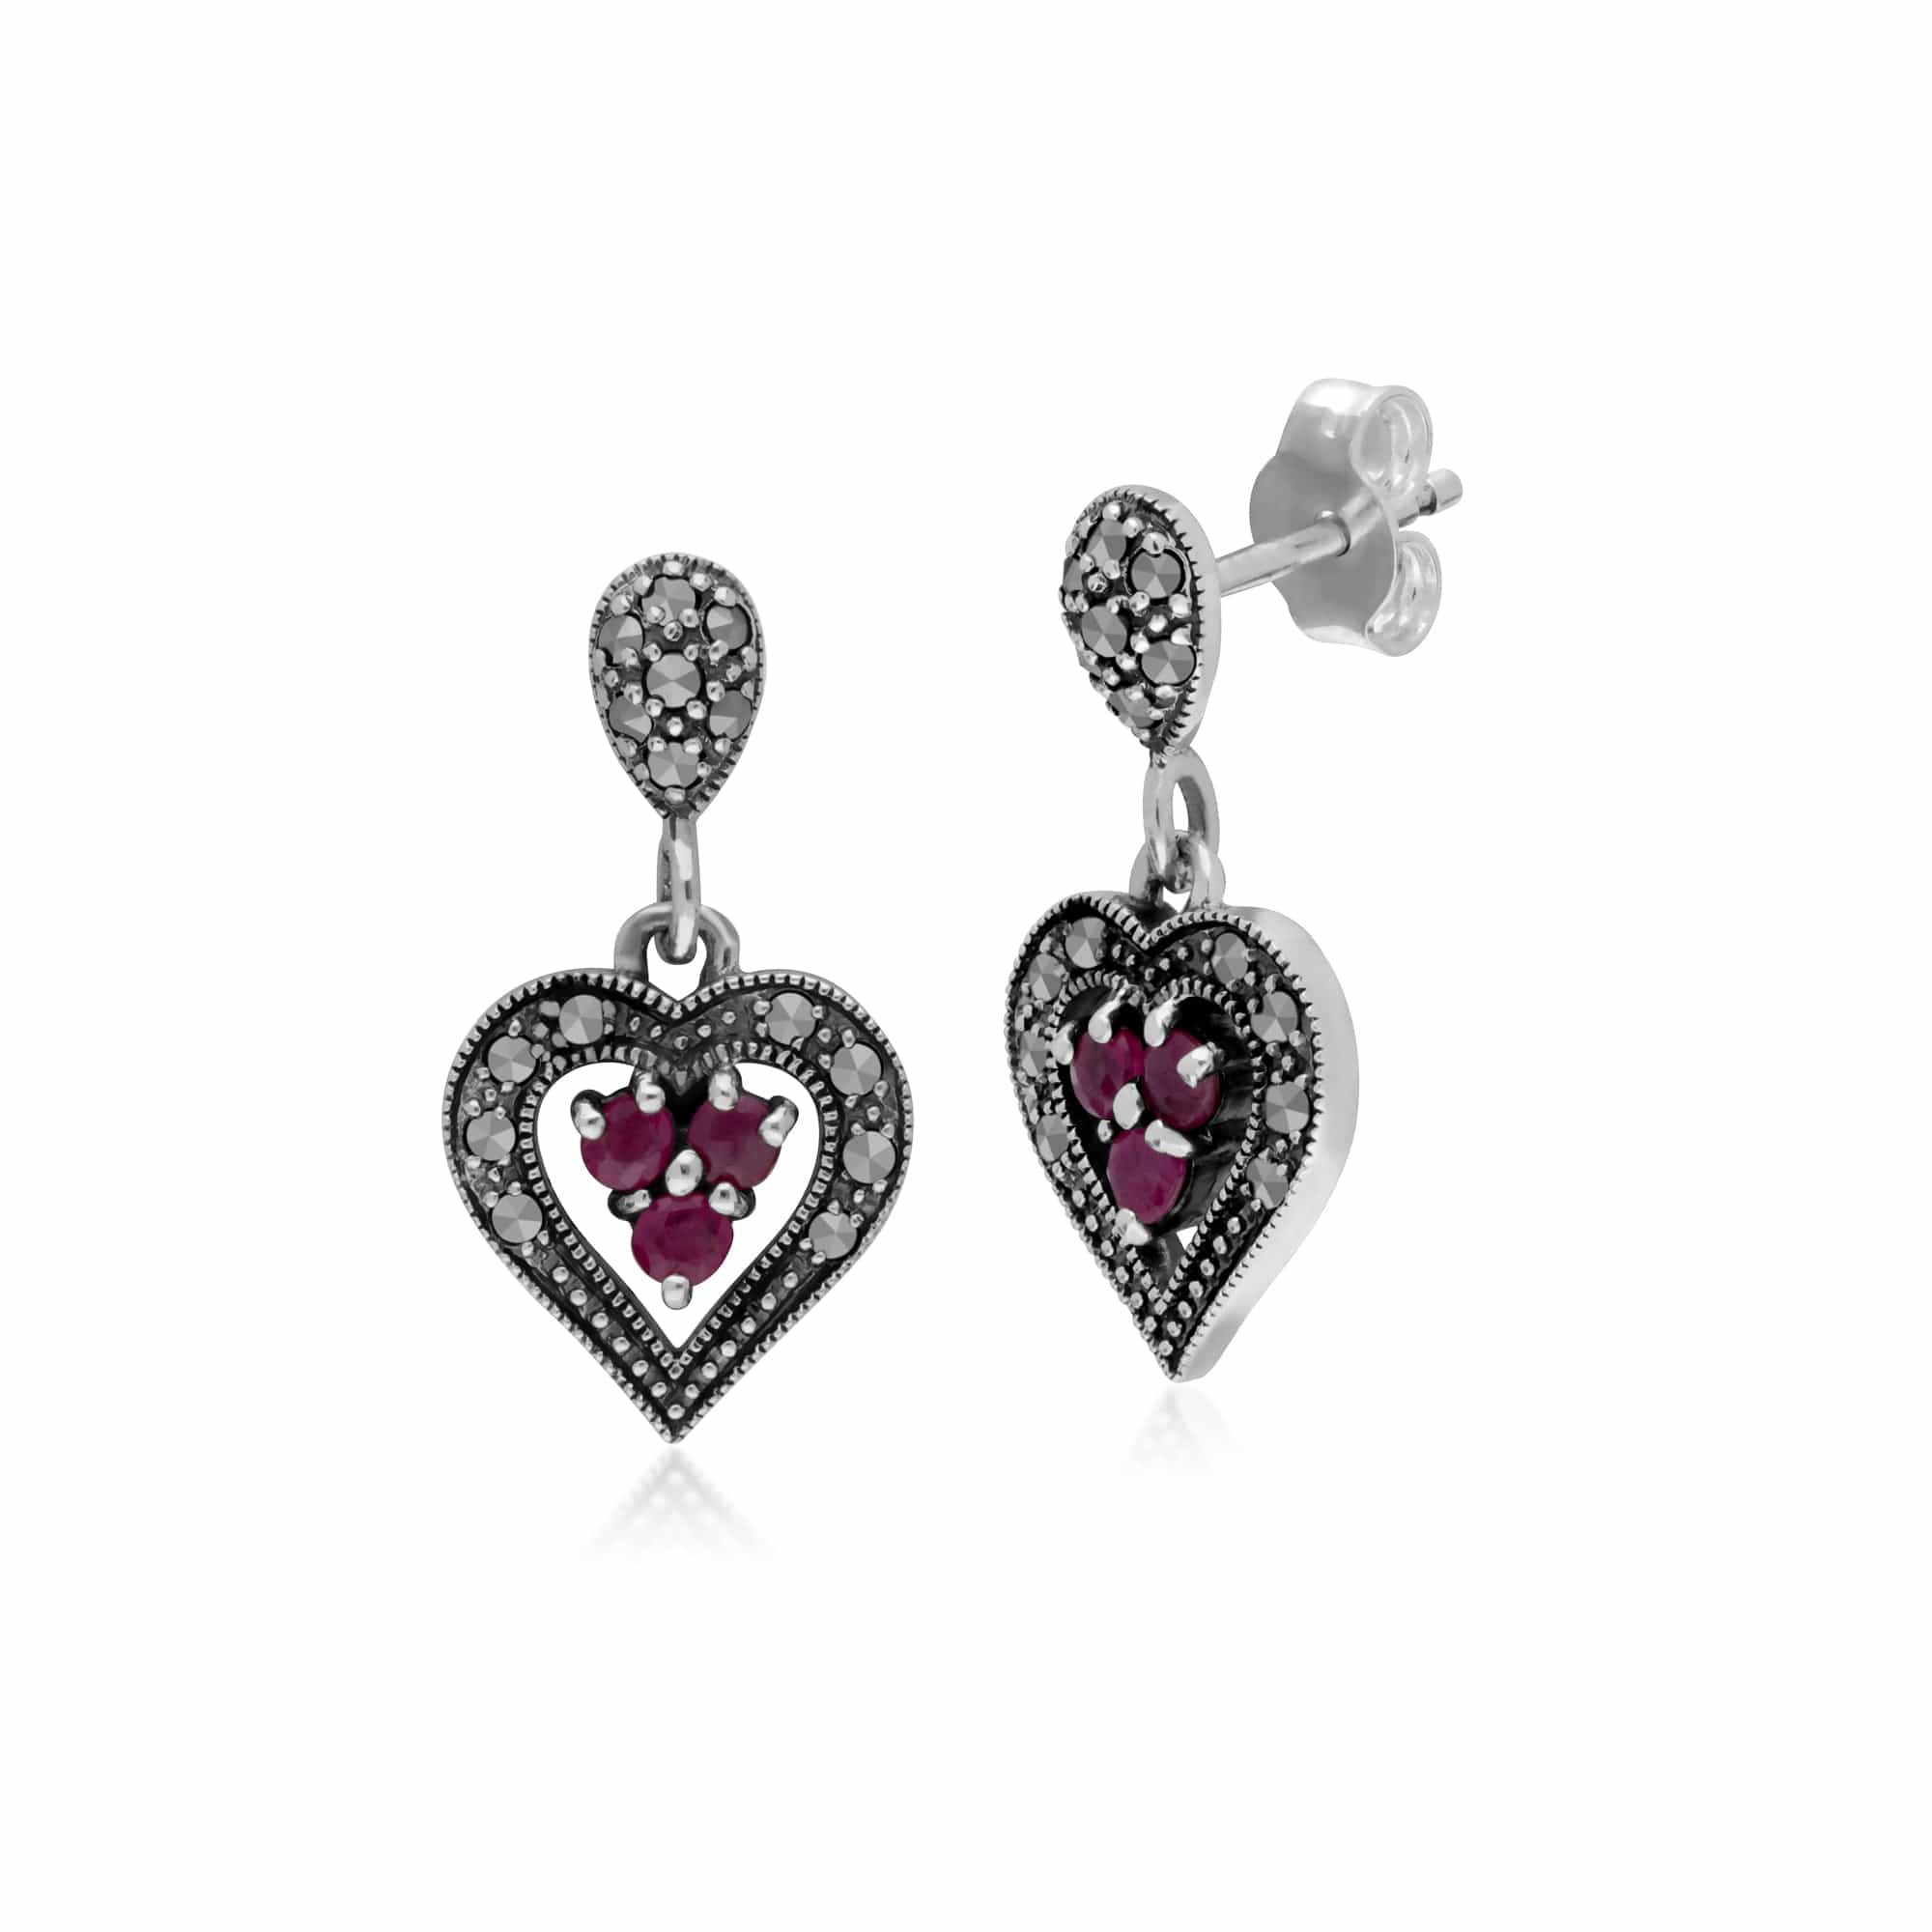 214E616102925-214N481204925 Art Nouveau Style Style Round Ruby & Marcasite Heart Earrings & Pendant Set in 925 Sterling Silver 2